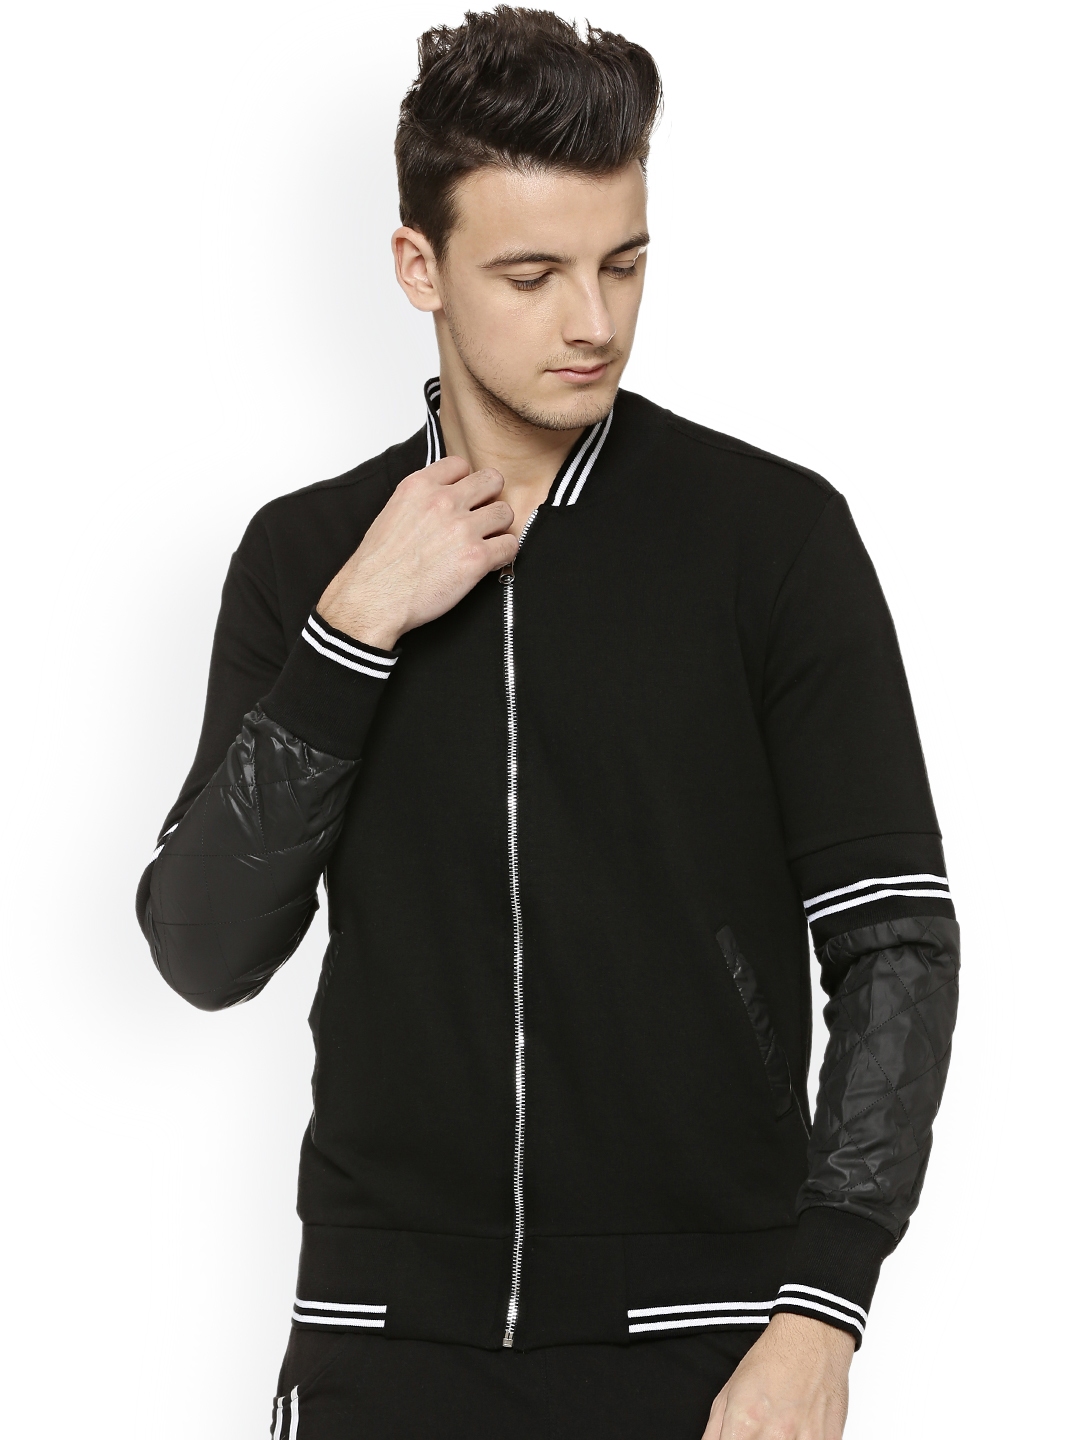 Buy Campus Sutra Men Black Solid Varsity Jacket - Jackets for Men 2056288